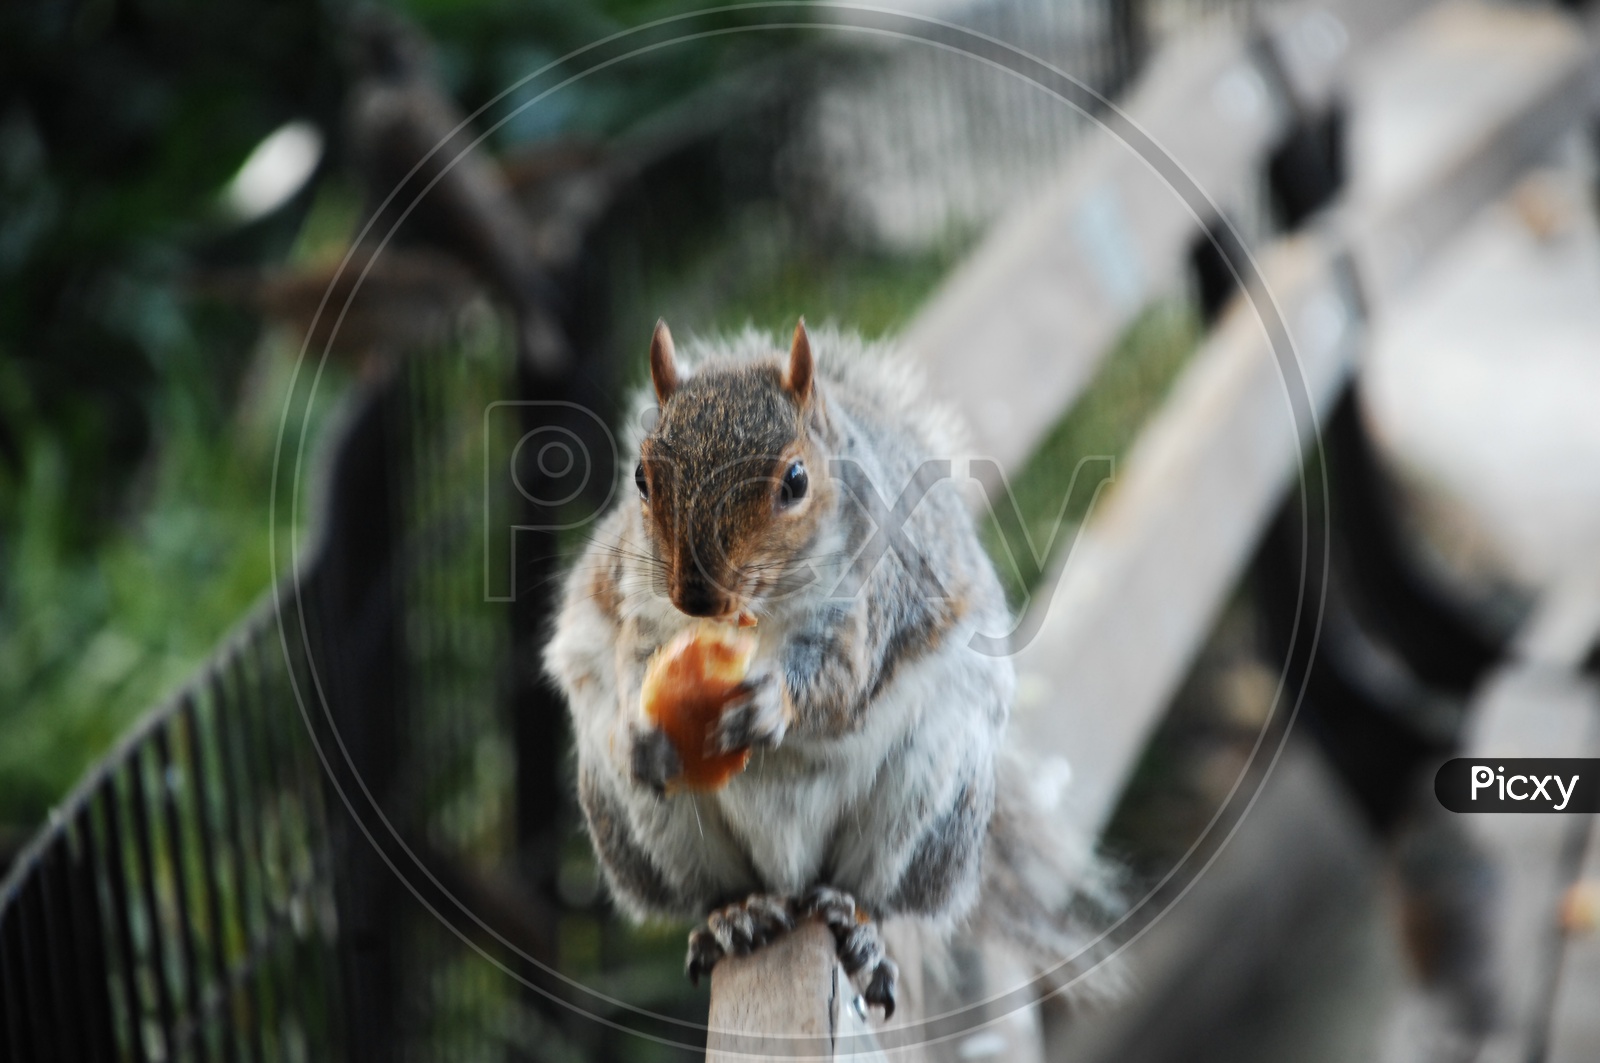 A Squirrel eating a lemon slice